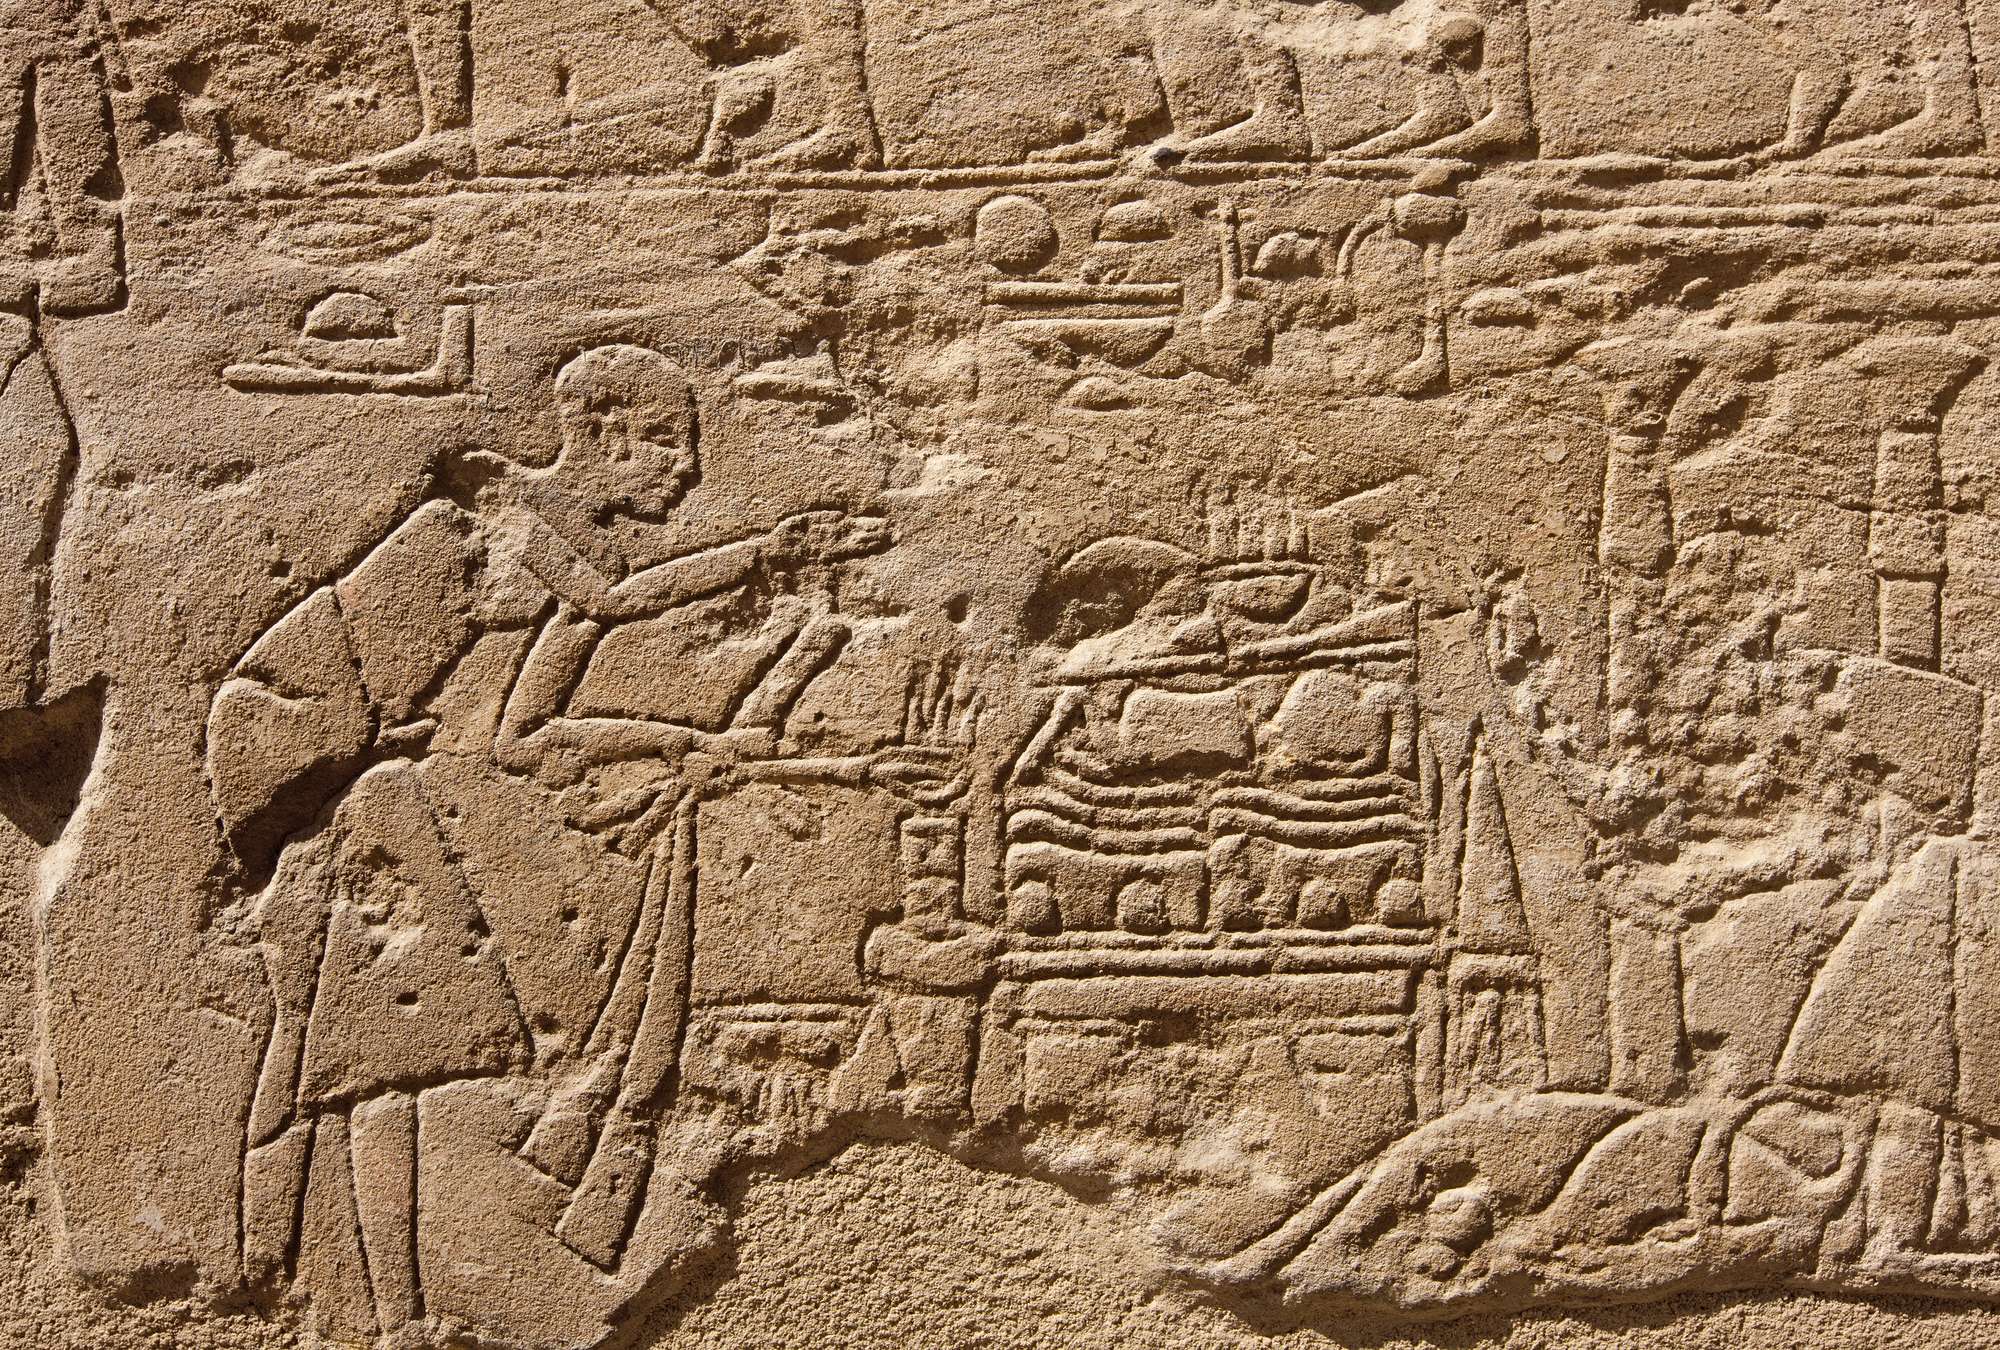             Papel pintado con pintura egipcia antigua sobre piedra
        